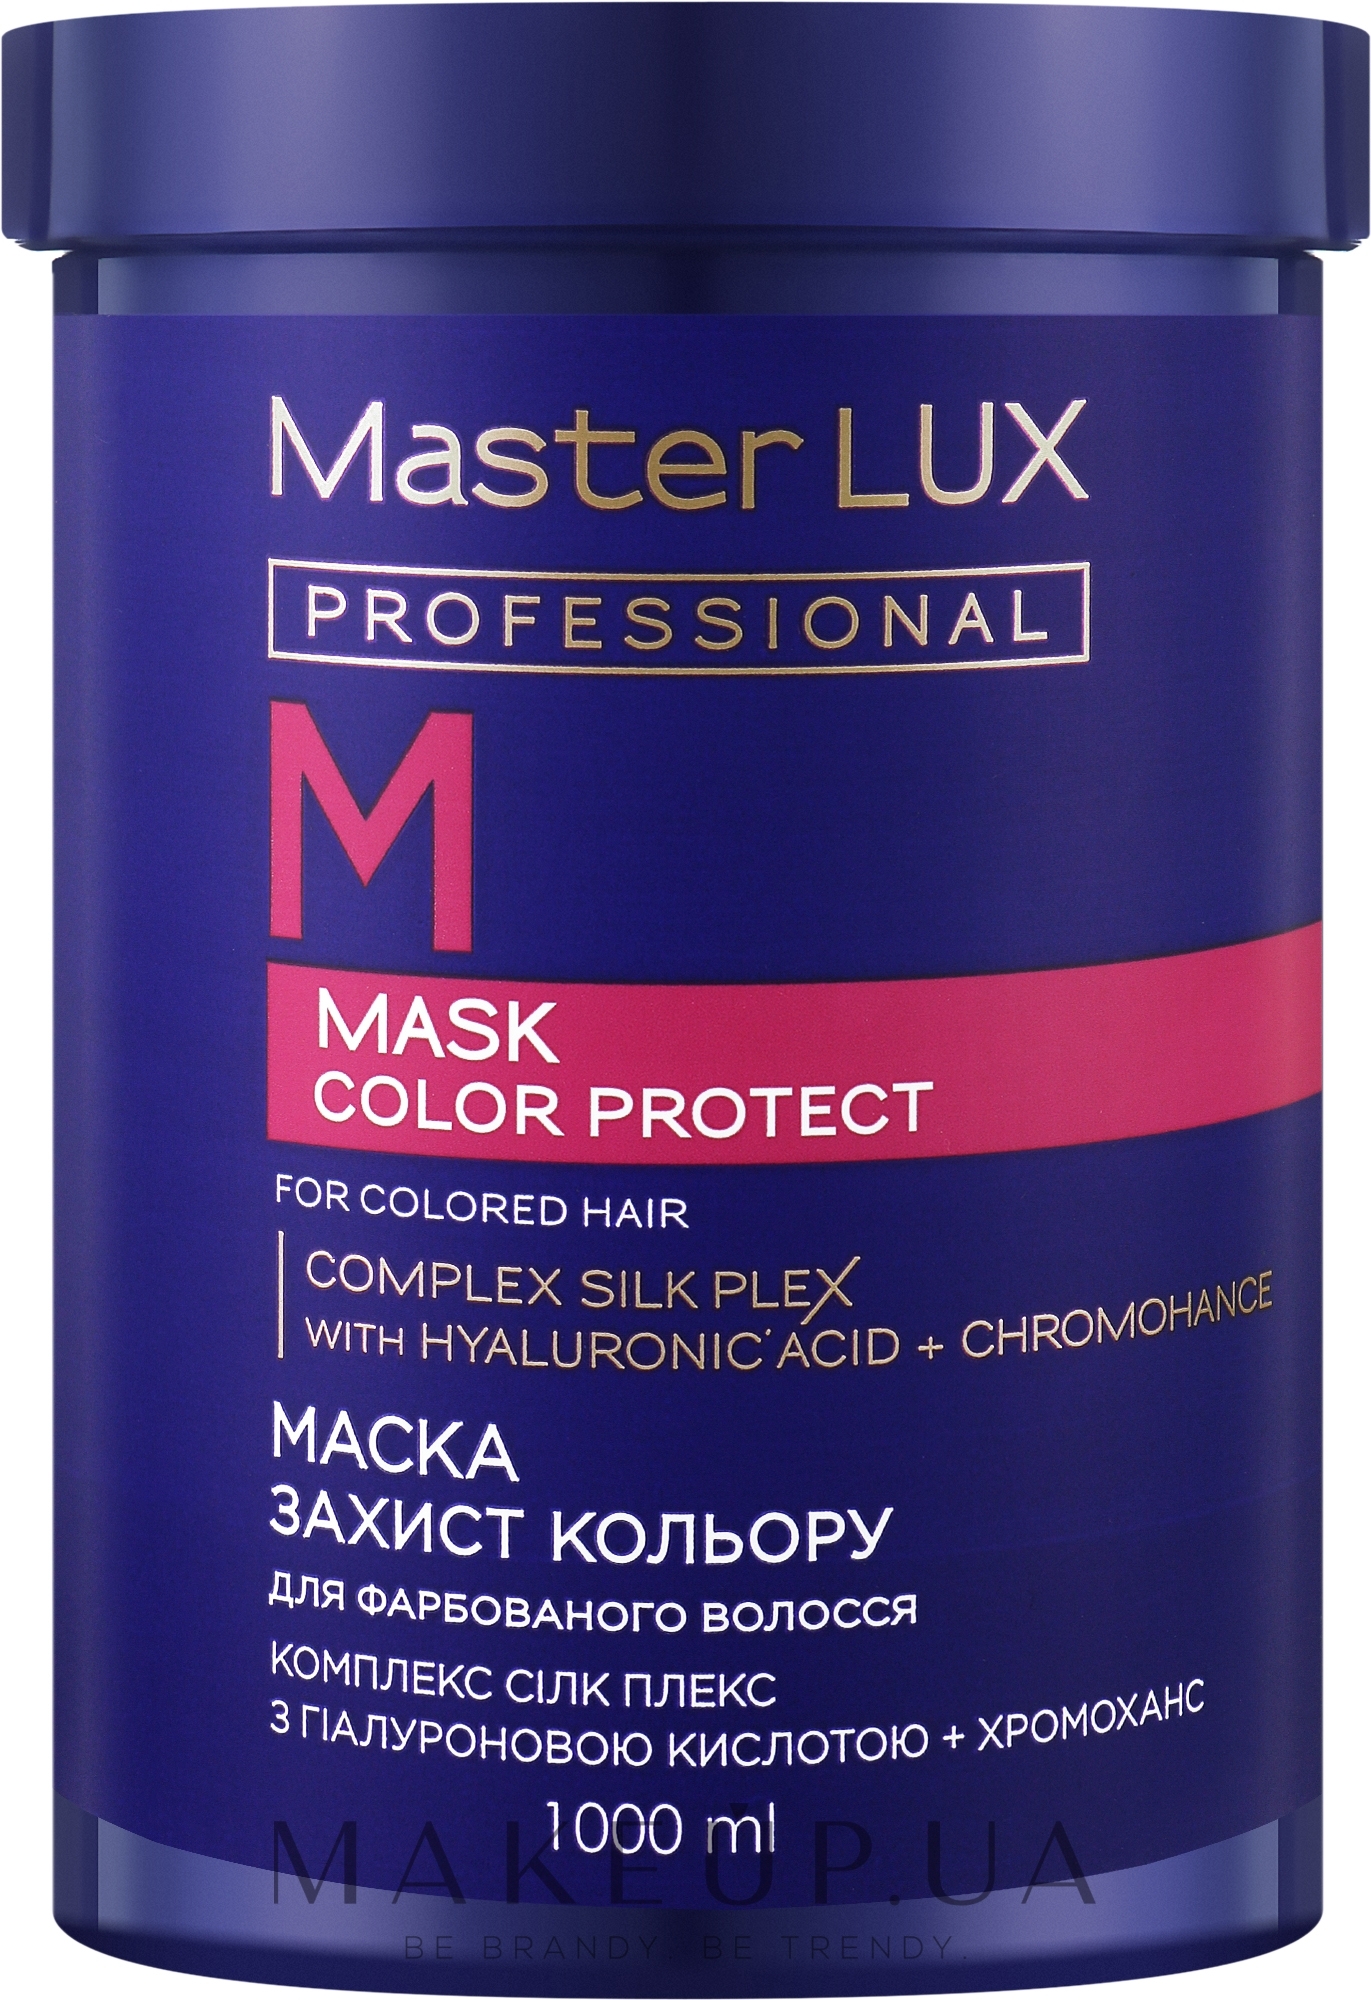 Маска для фарбованого волосся "Захист кольору" - Master LUX Professional Color Protect Mask — фото 1000ml